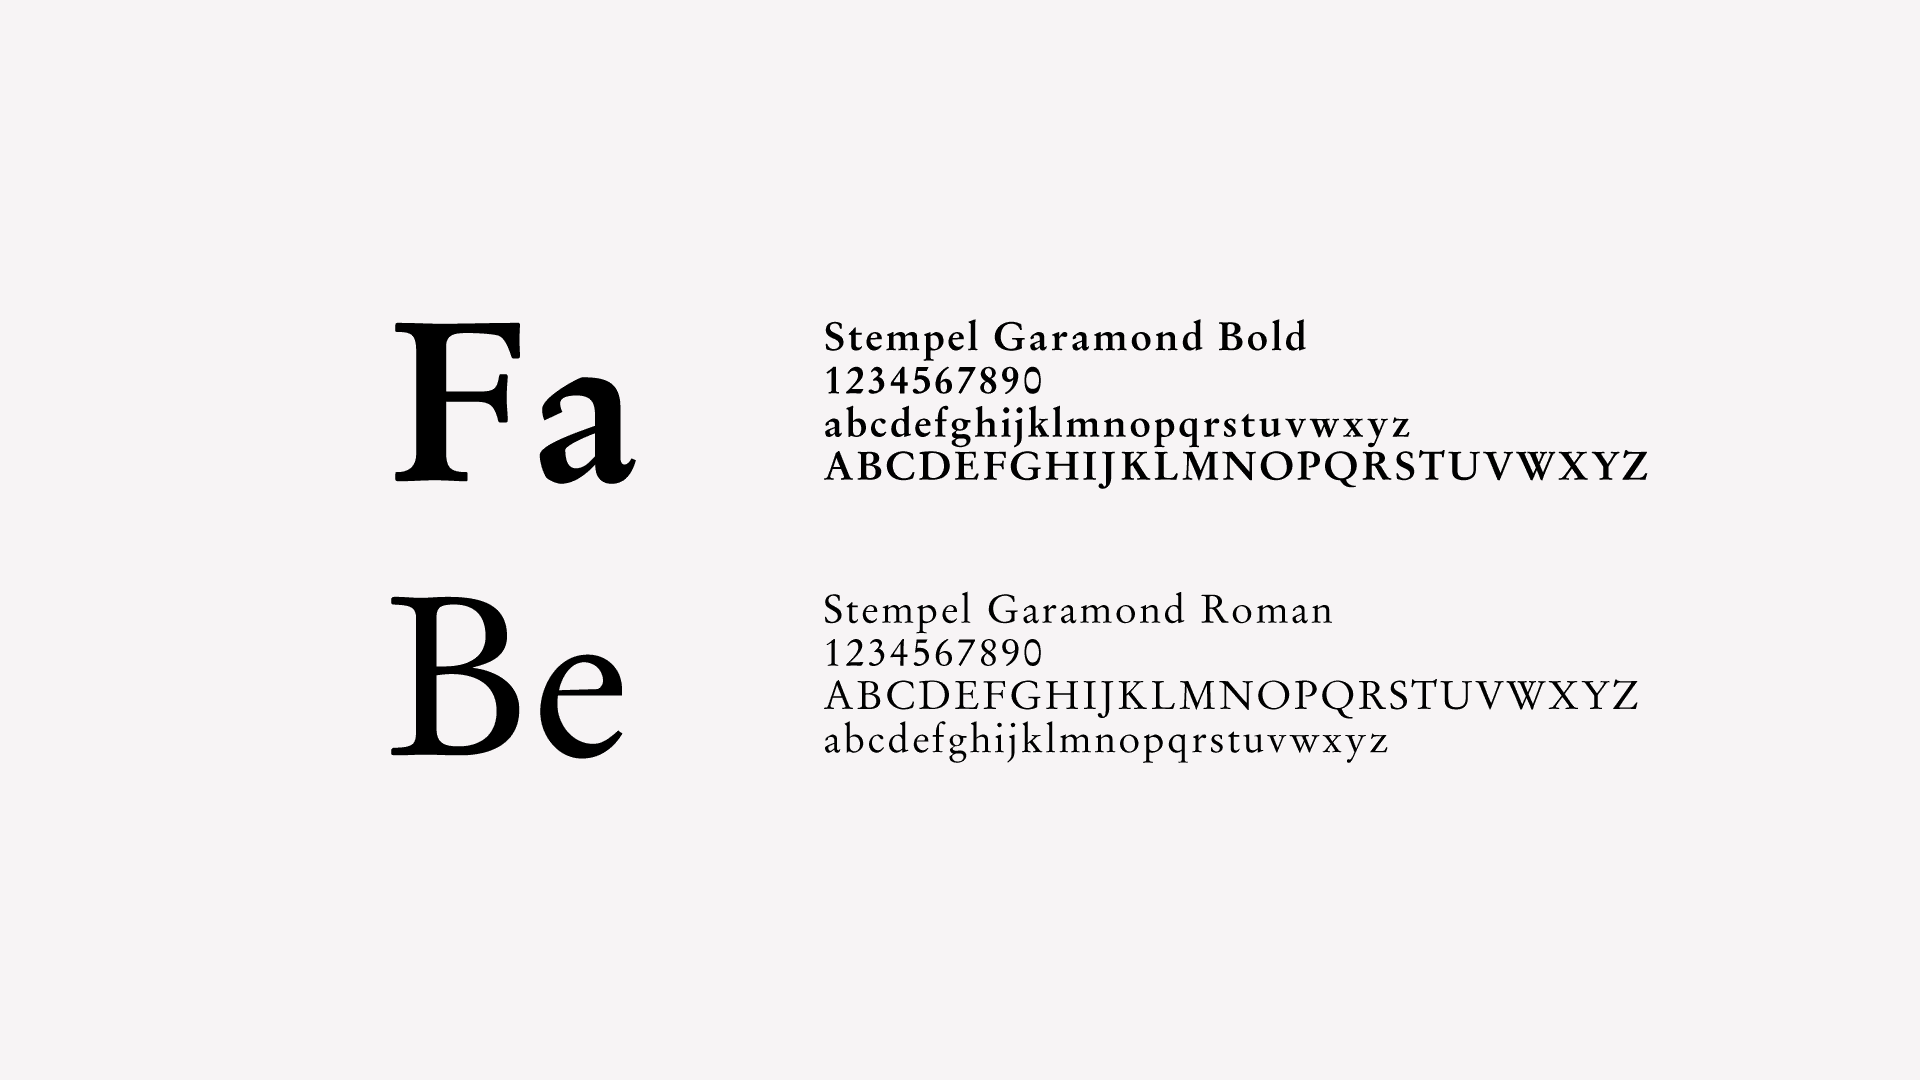 fairmont hamilton princess bermuda brand fonts